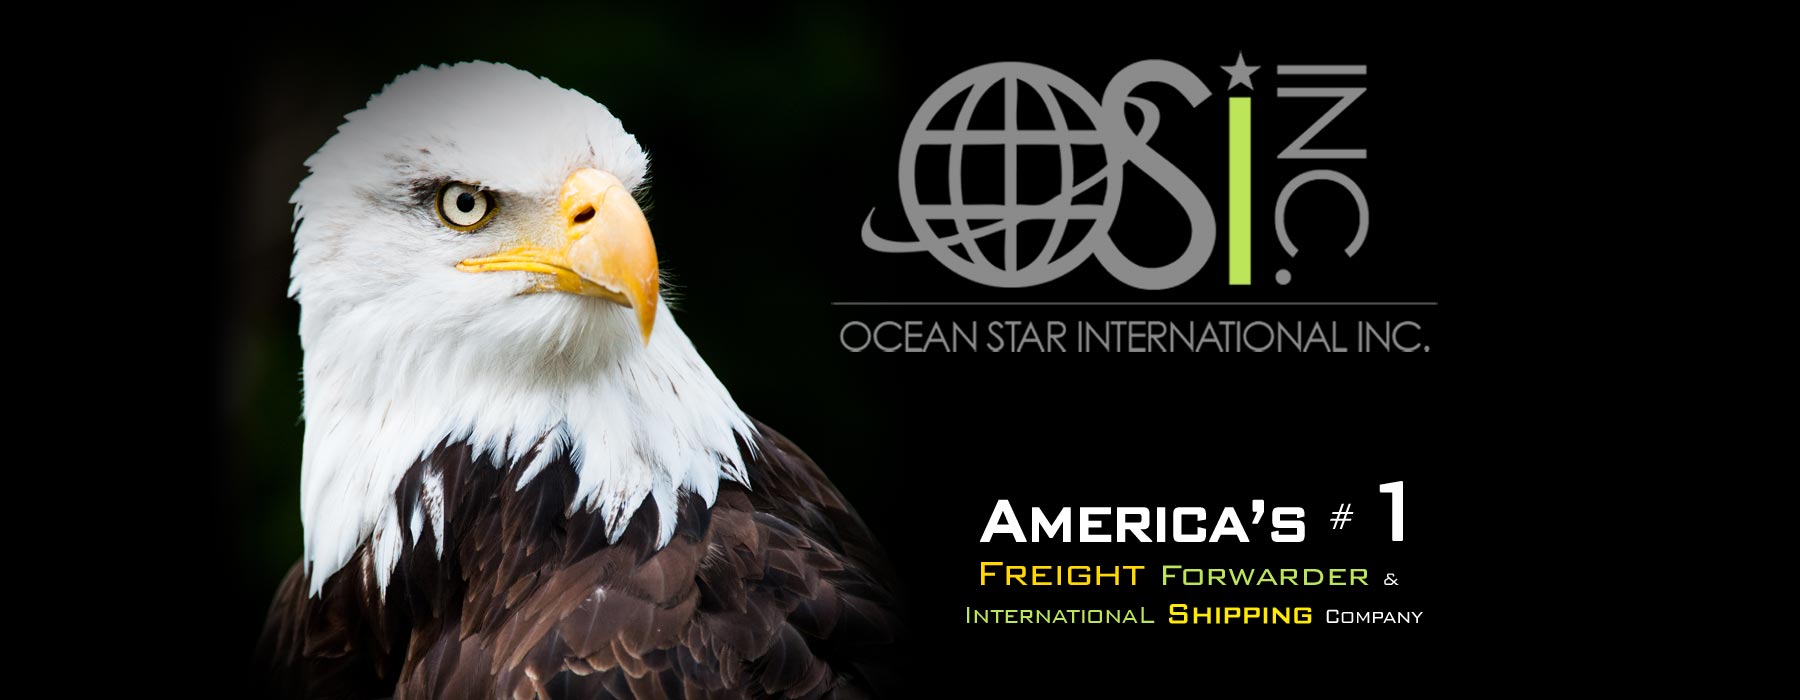 osi-international-shipping-company